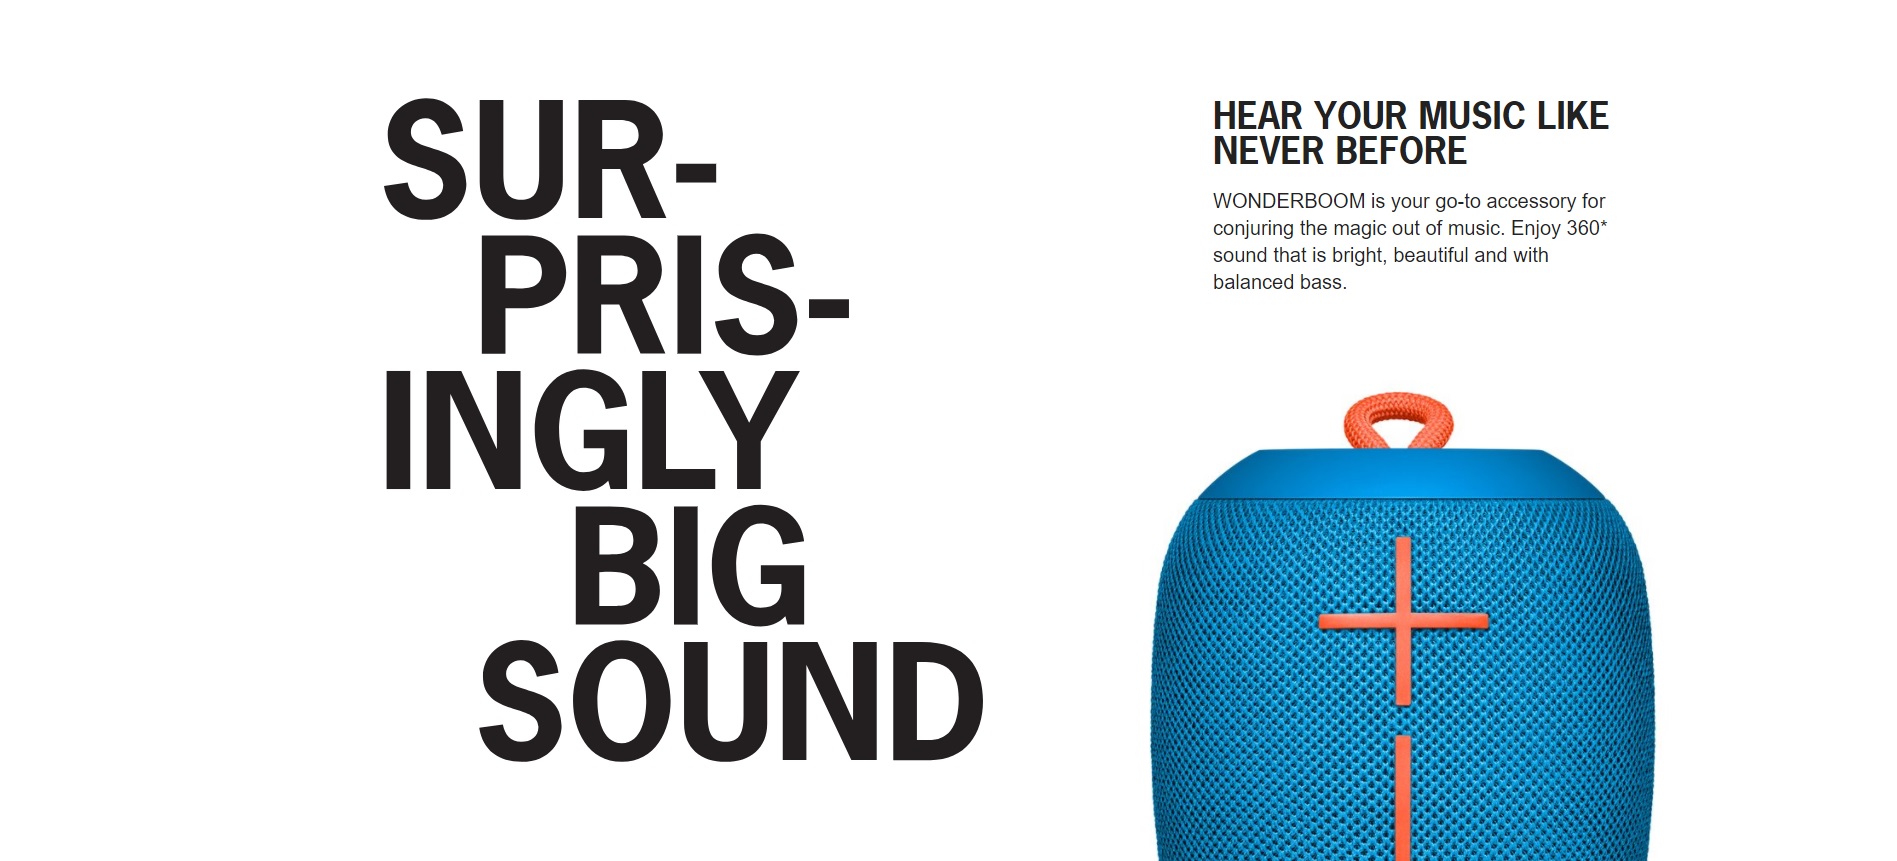 Ultimate Ears Mengumumkan Pembesar Suara UE Wonderboom – Hadir Dengan Rekaan Padat Dan Audio Berkualiti Tinggi